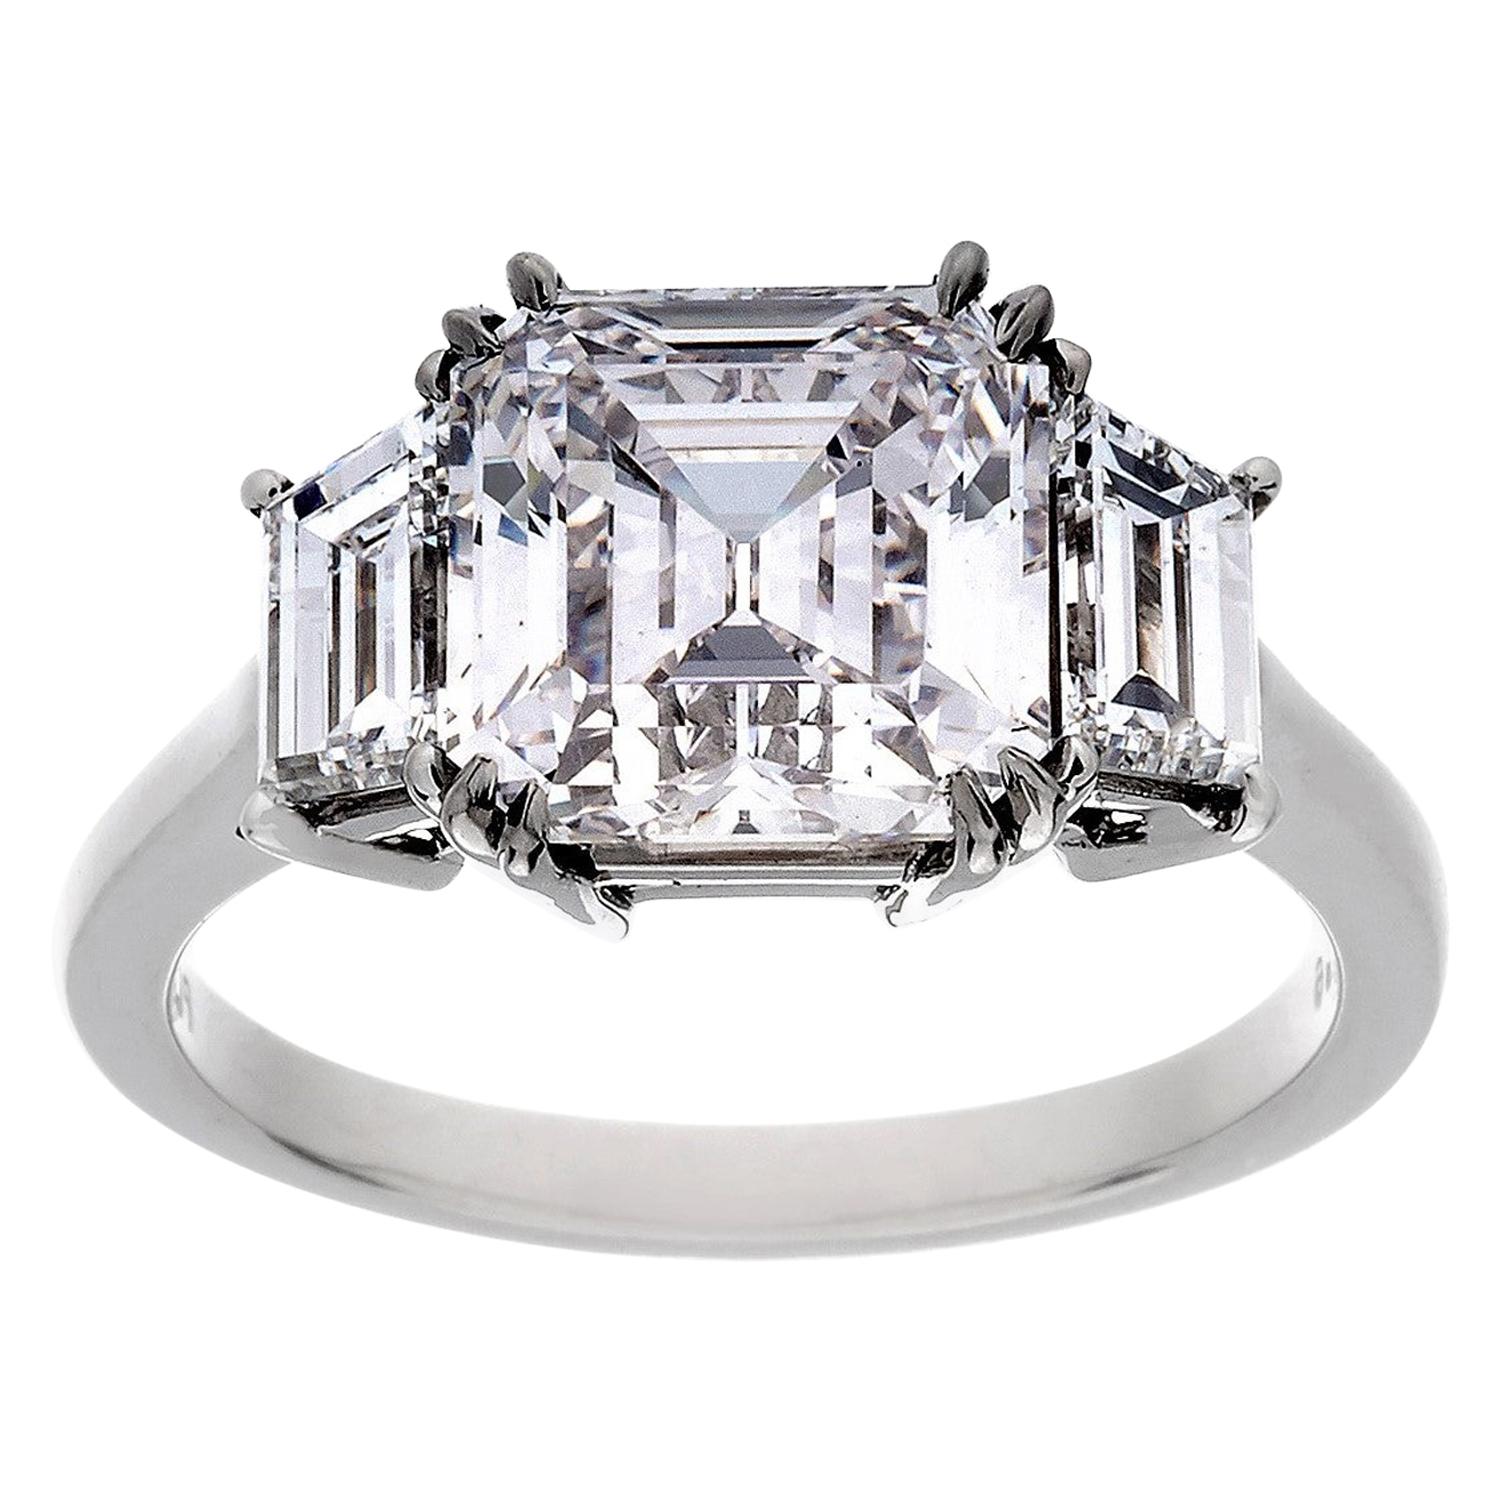 Platinum 3.01 Carat Assher Cut Diamond 3-Stone Ring, GIA, F Color, VVS1 Clarity For Sale